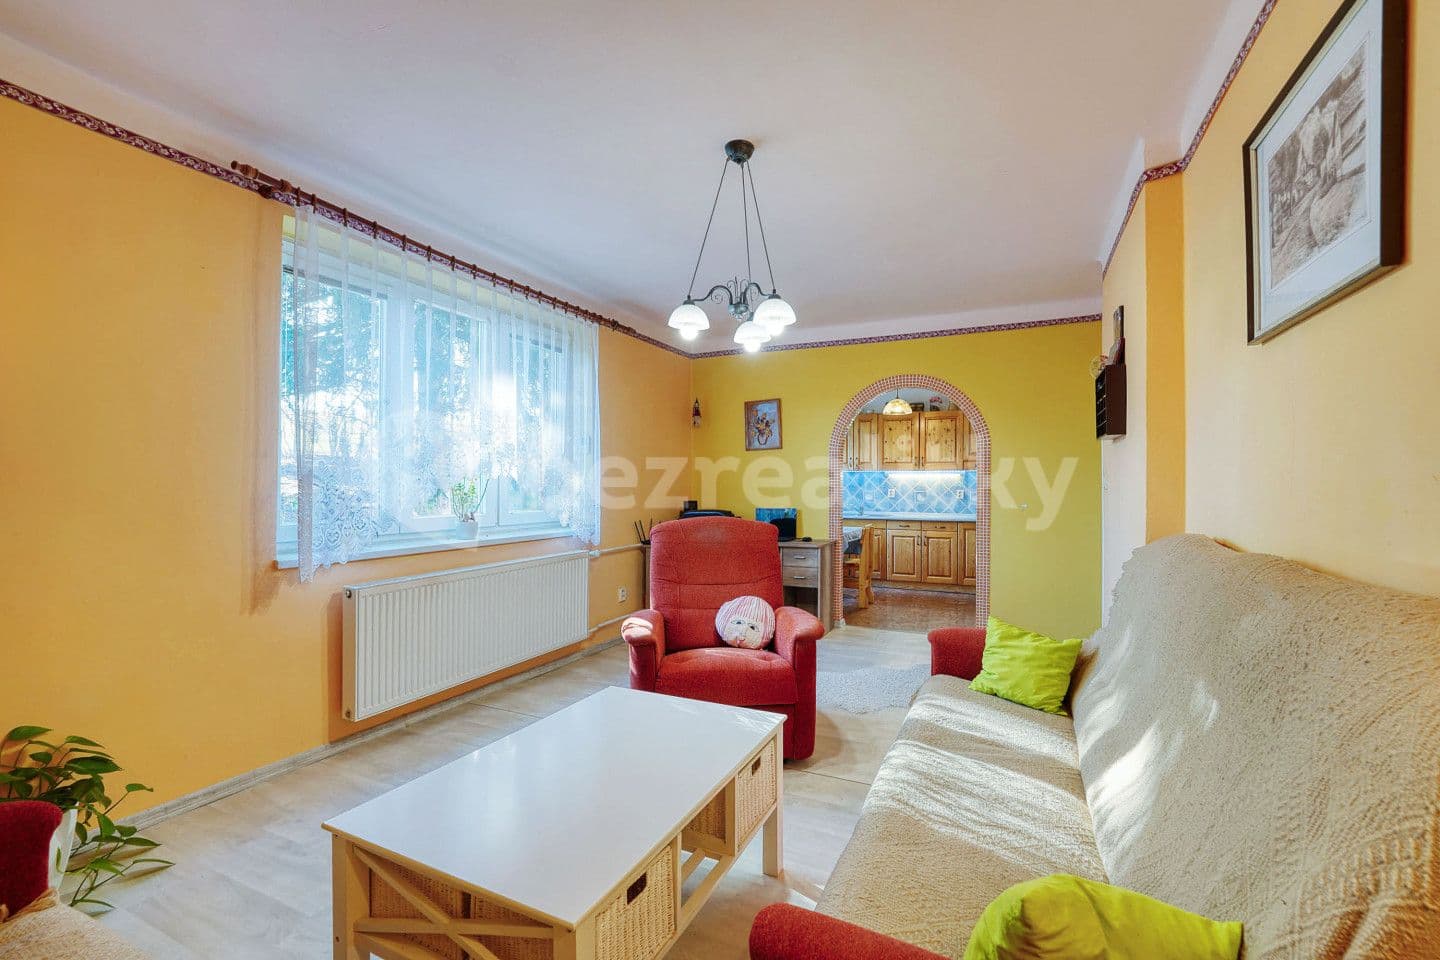 3 bedroom flat for sale, 71 m², Vrčeň, Plzeňský Region